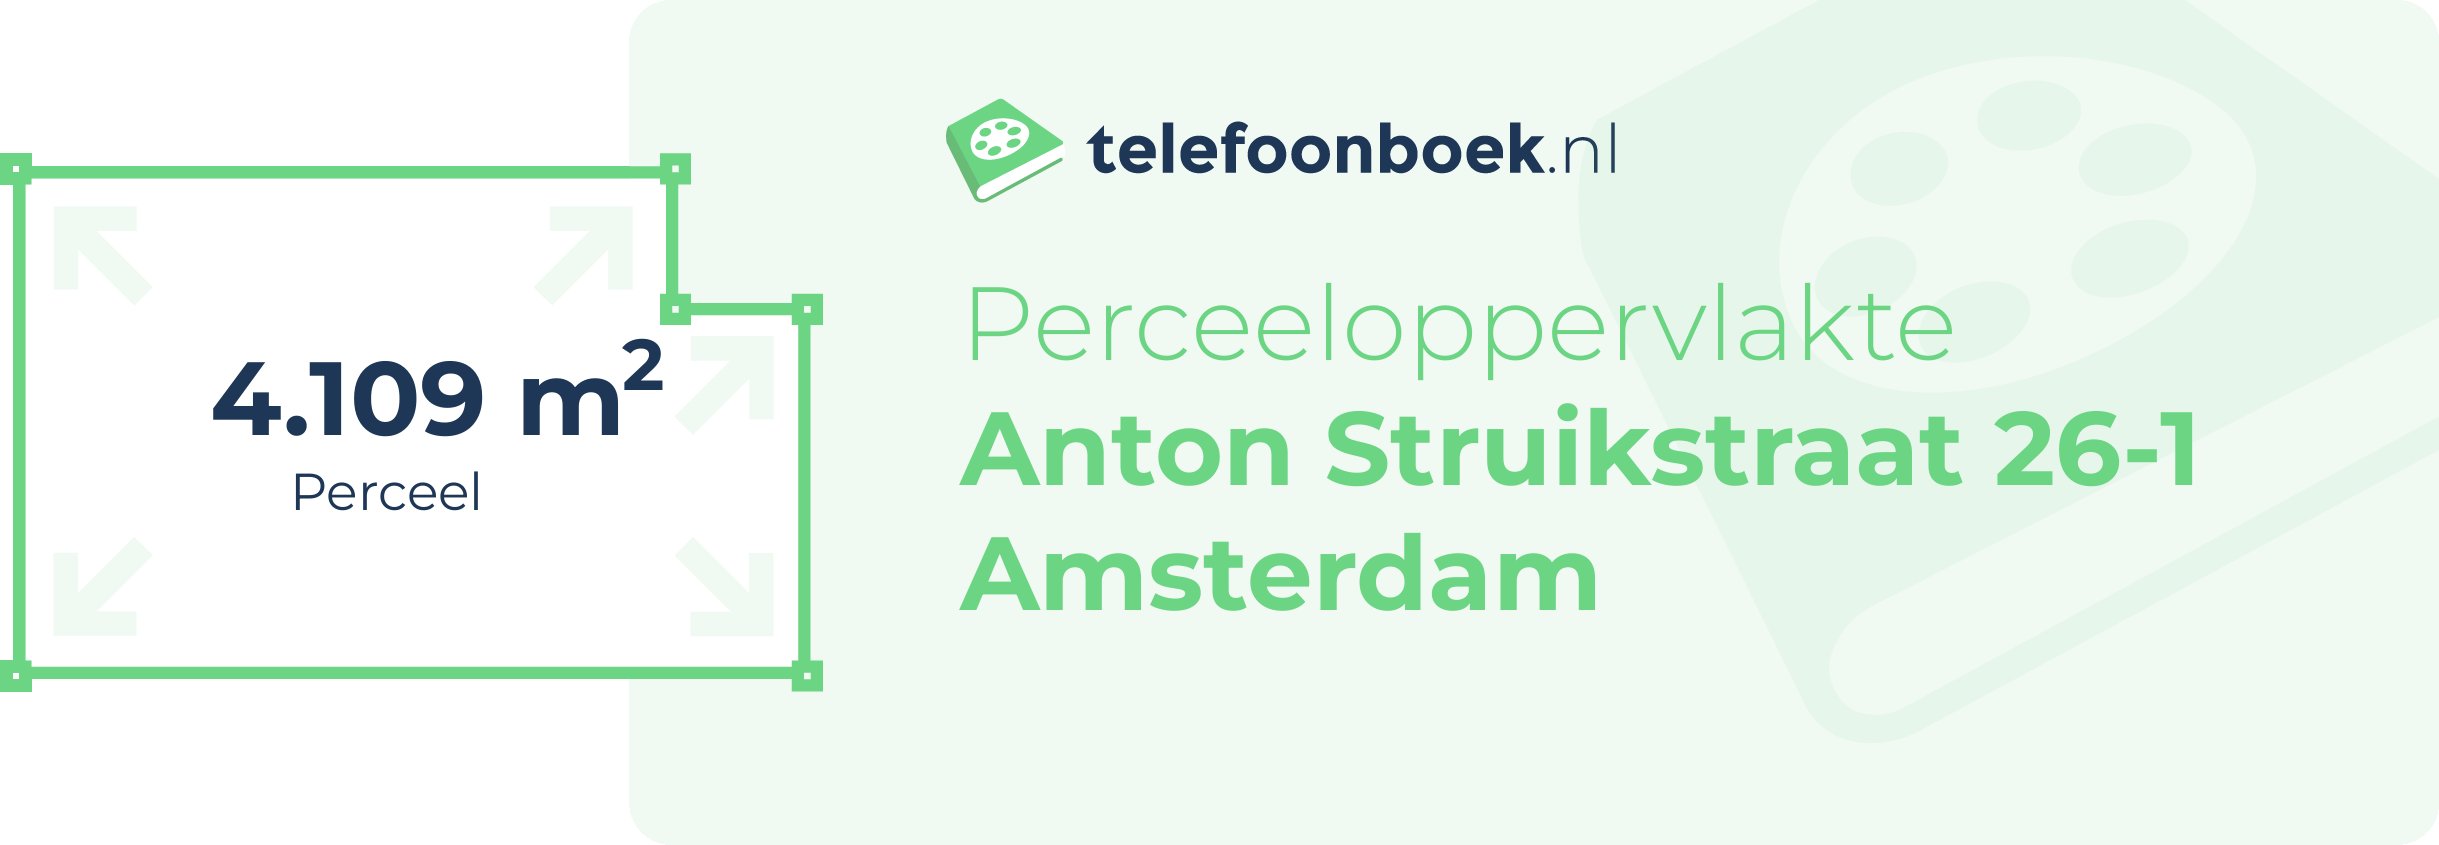 Perceeloppervlakte Anton Struikstraat 26-1 Amsterdam